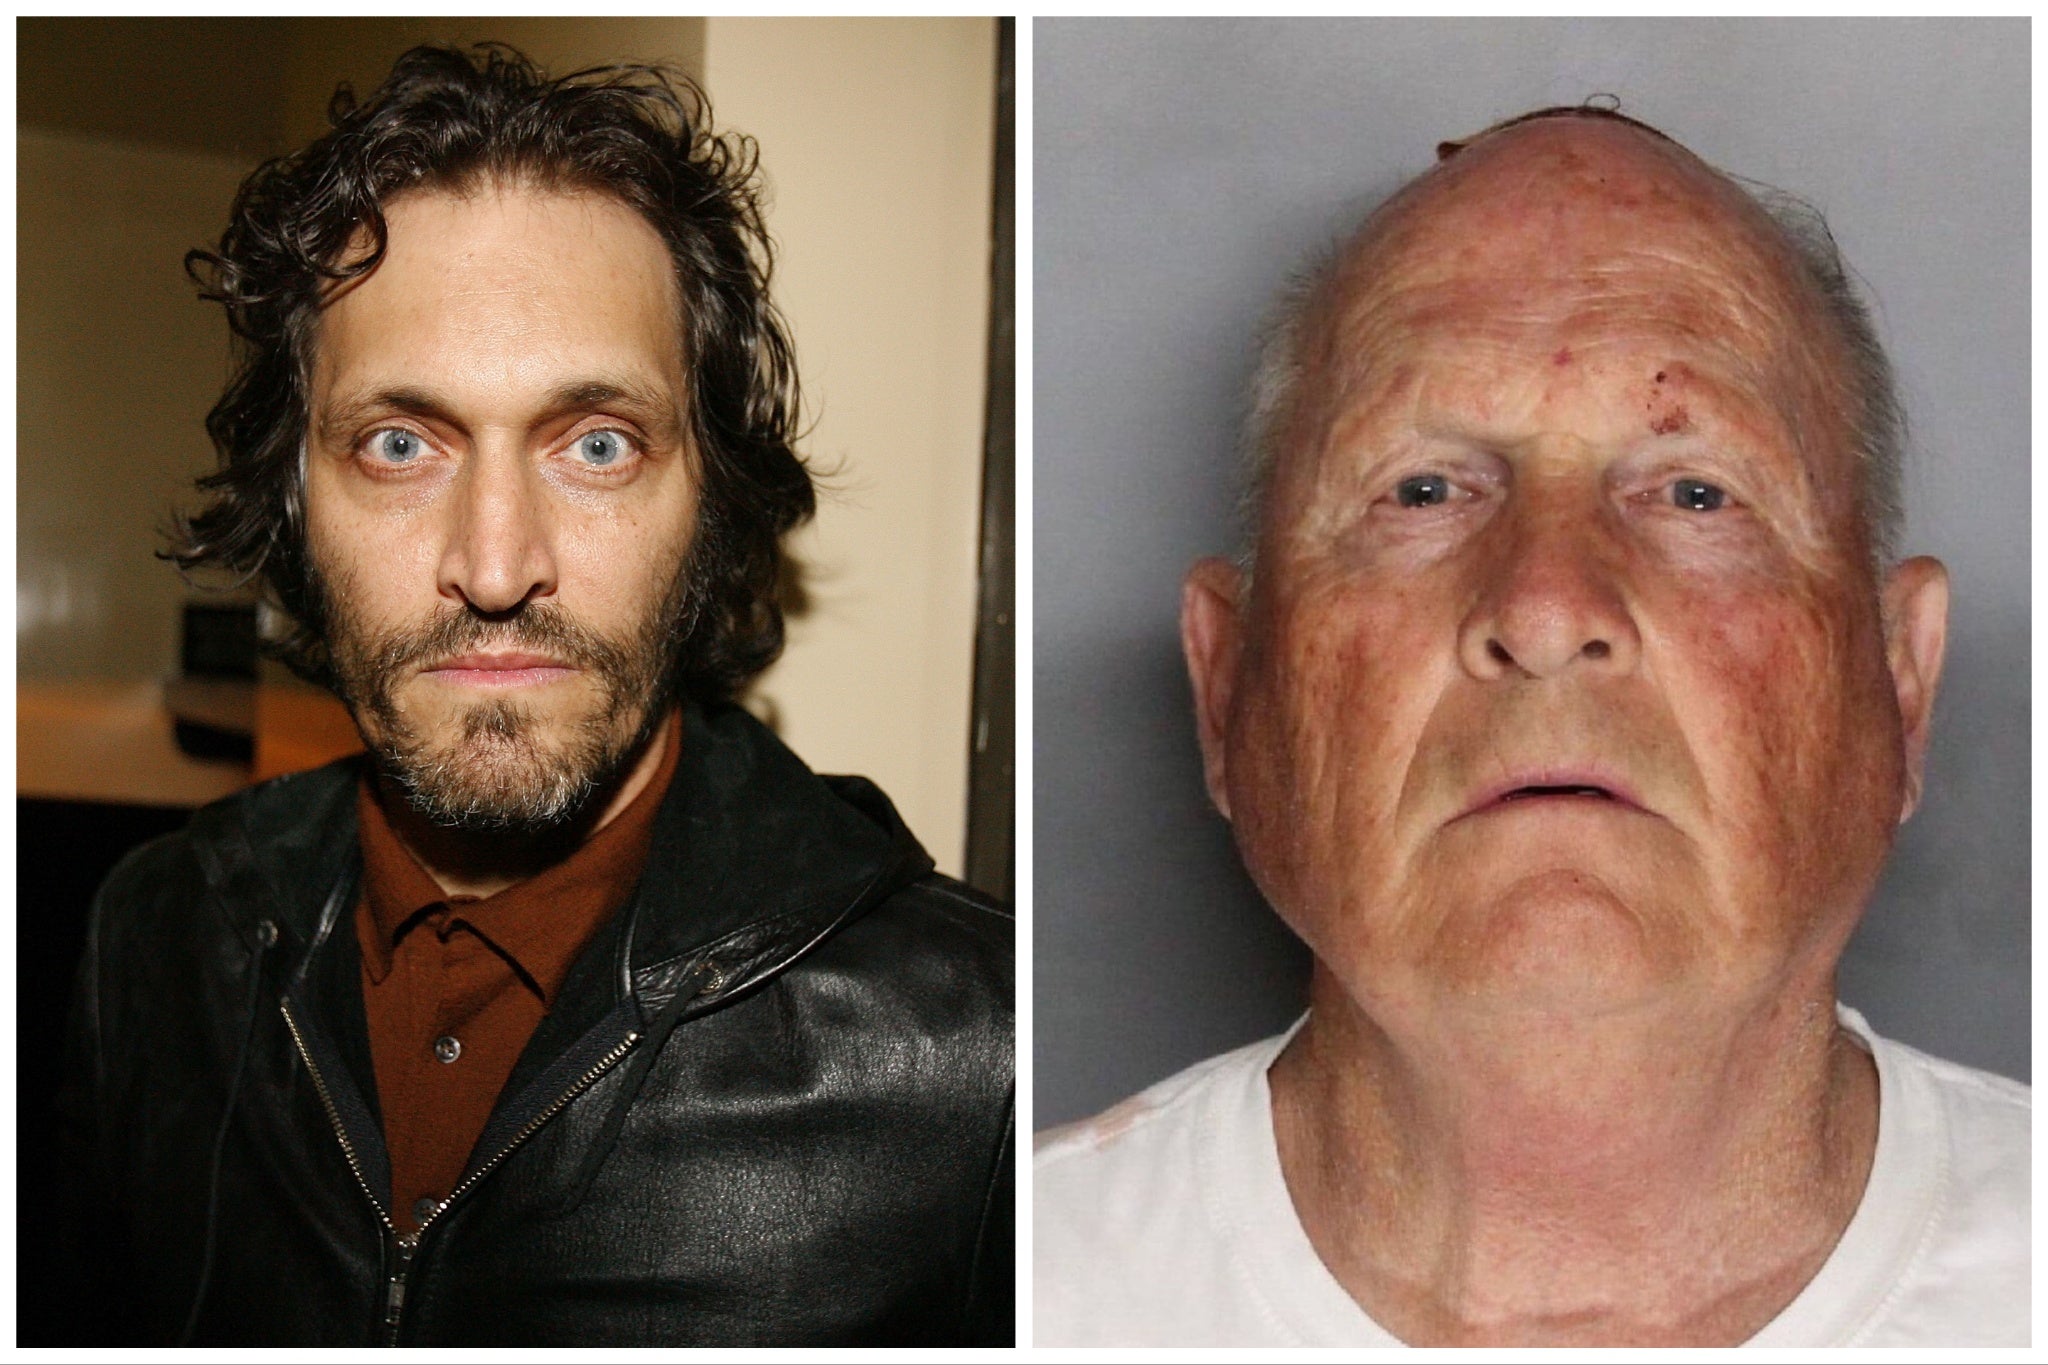 Vincent Gallo (left) and Joseph James DeAngelo, the Golden State Killer